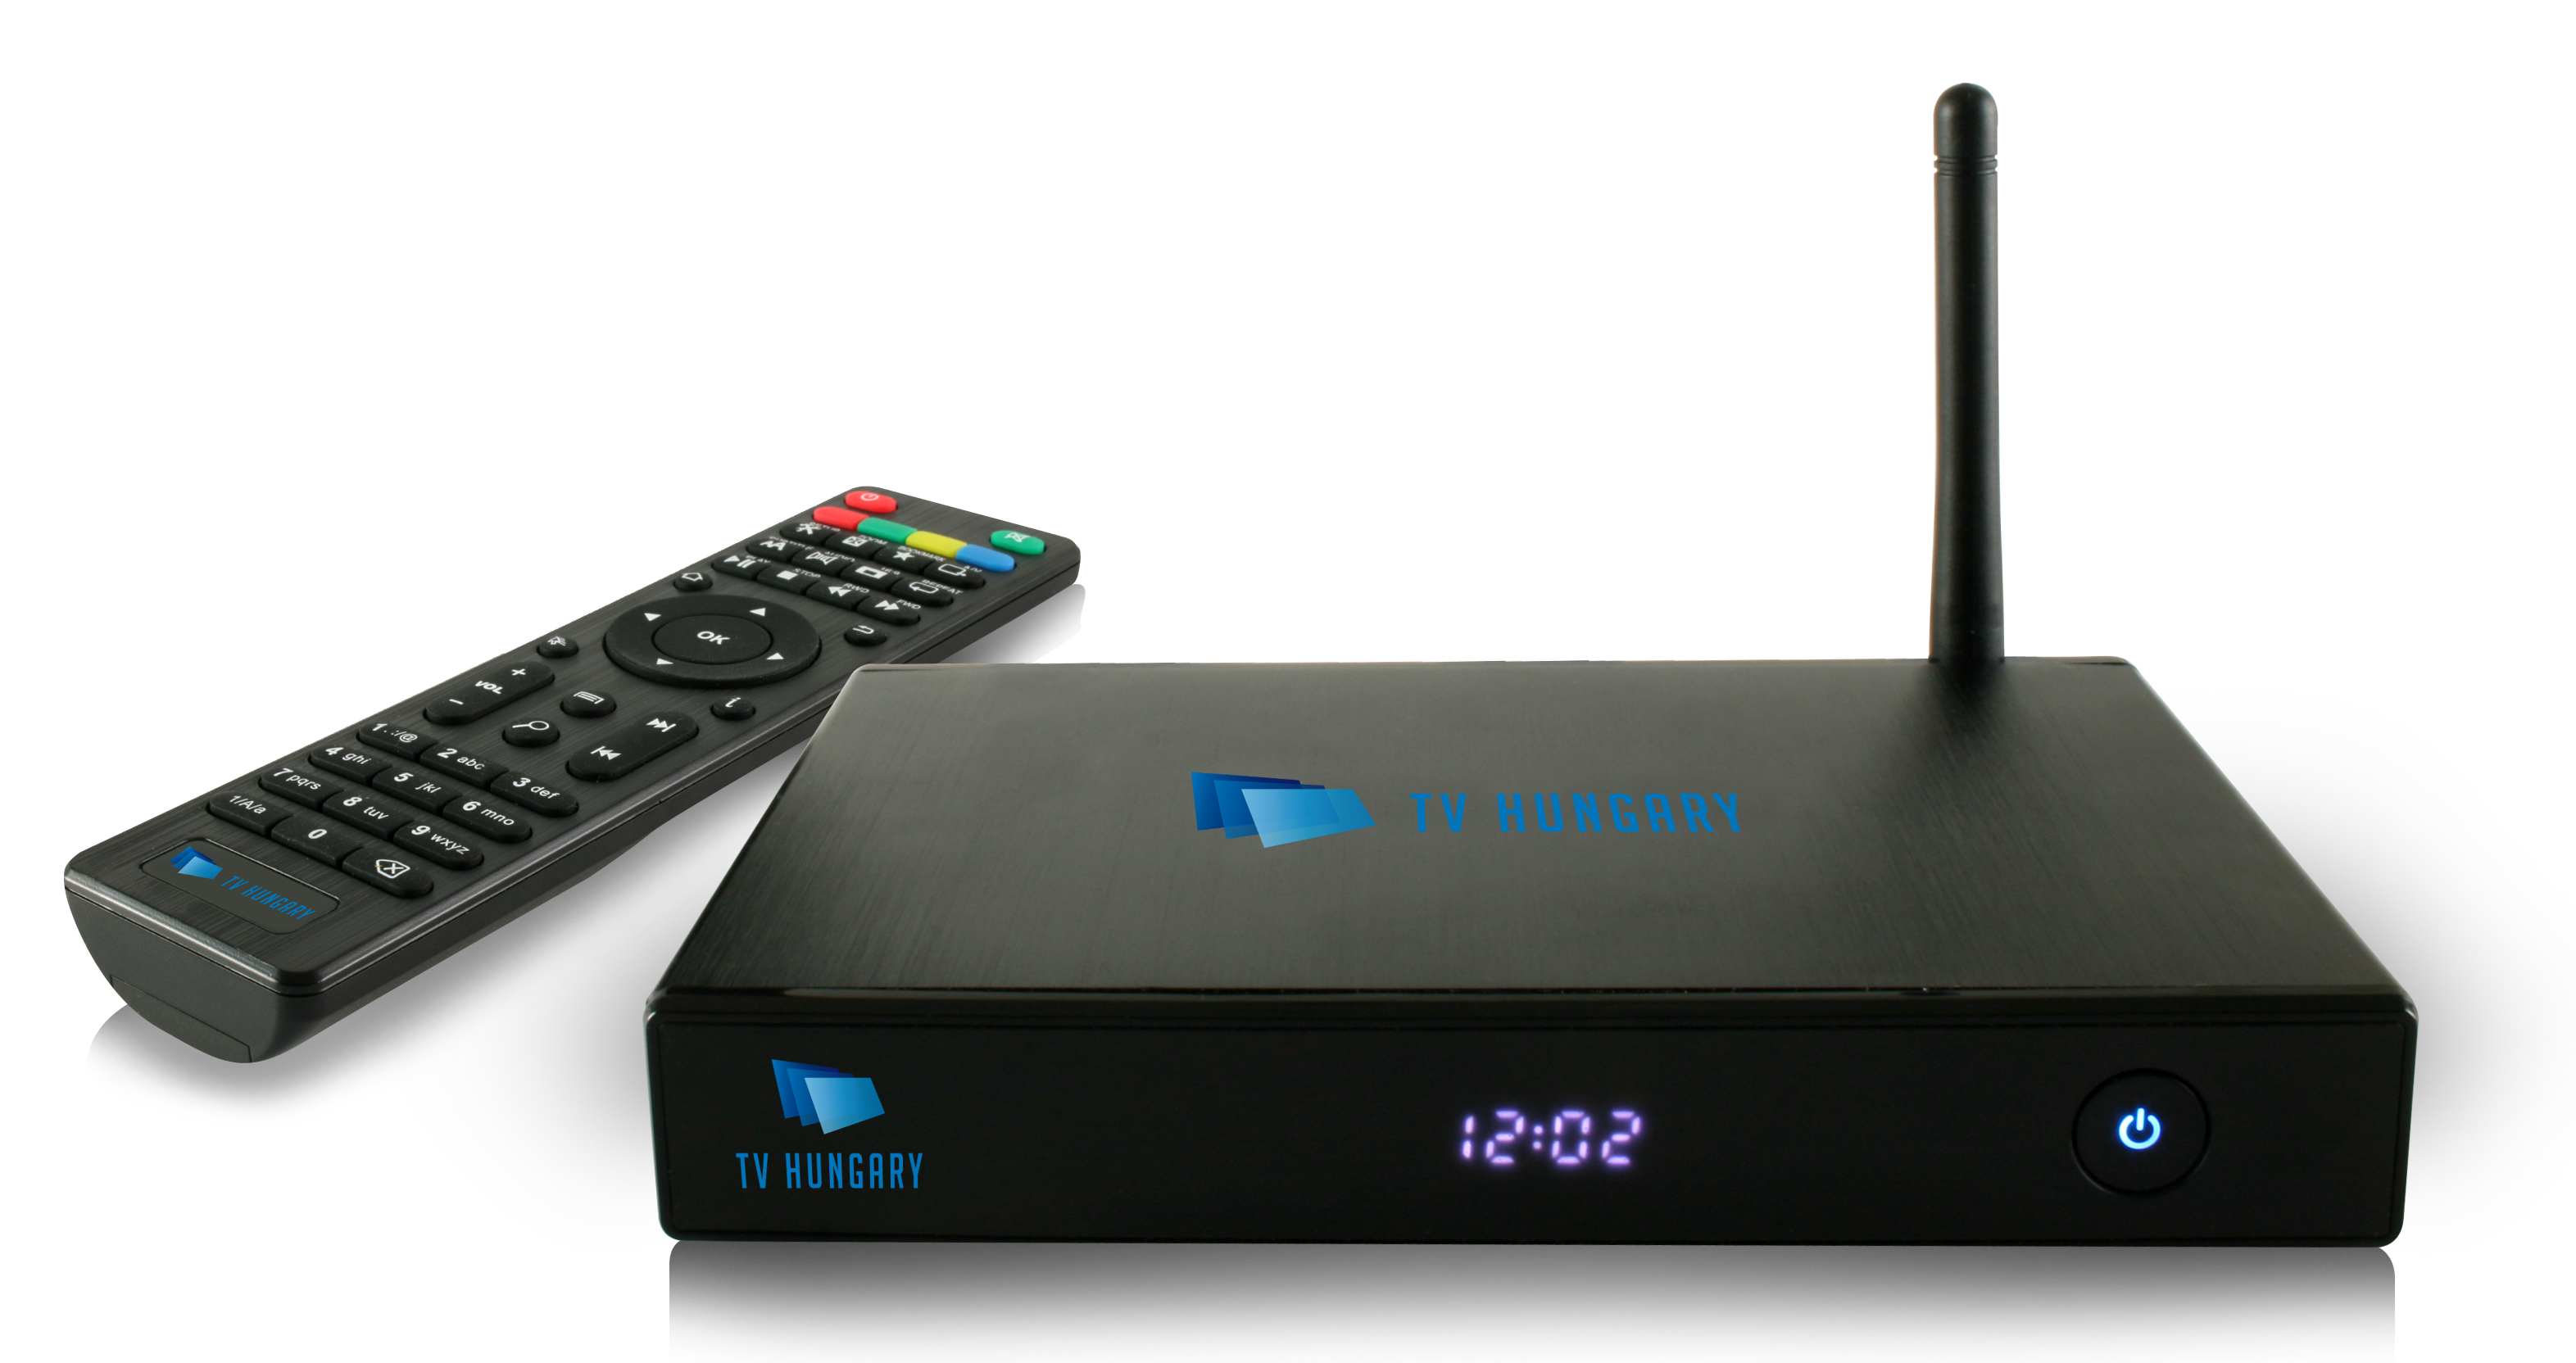 mediabox with remote